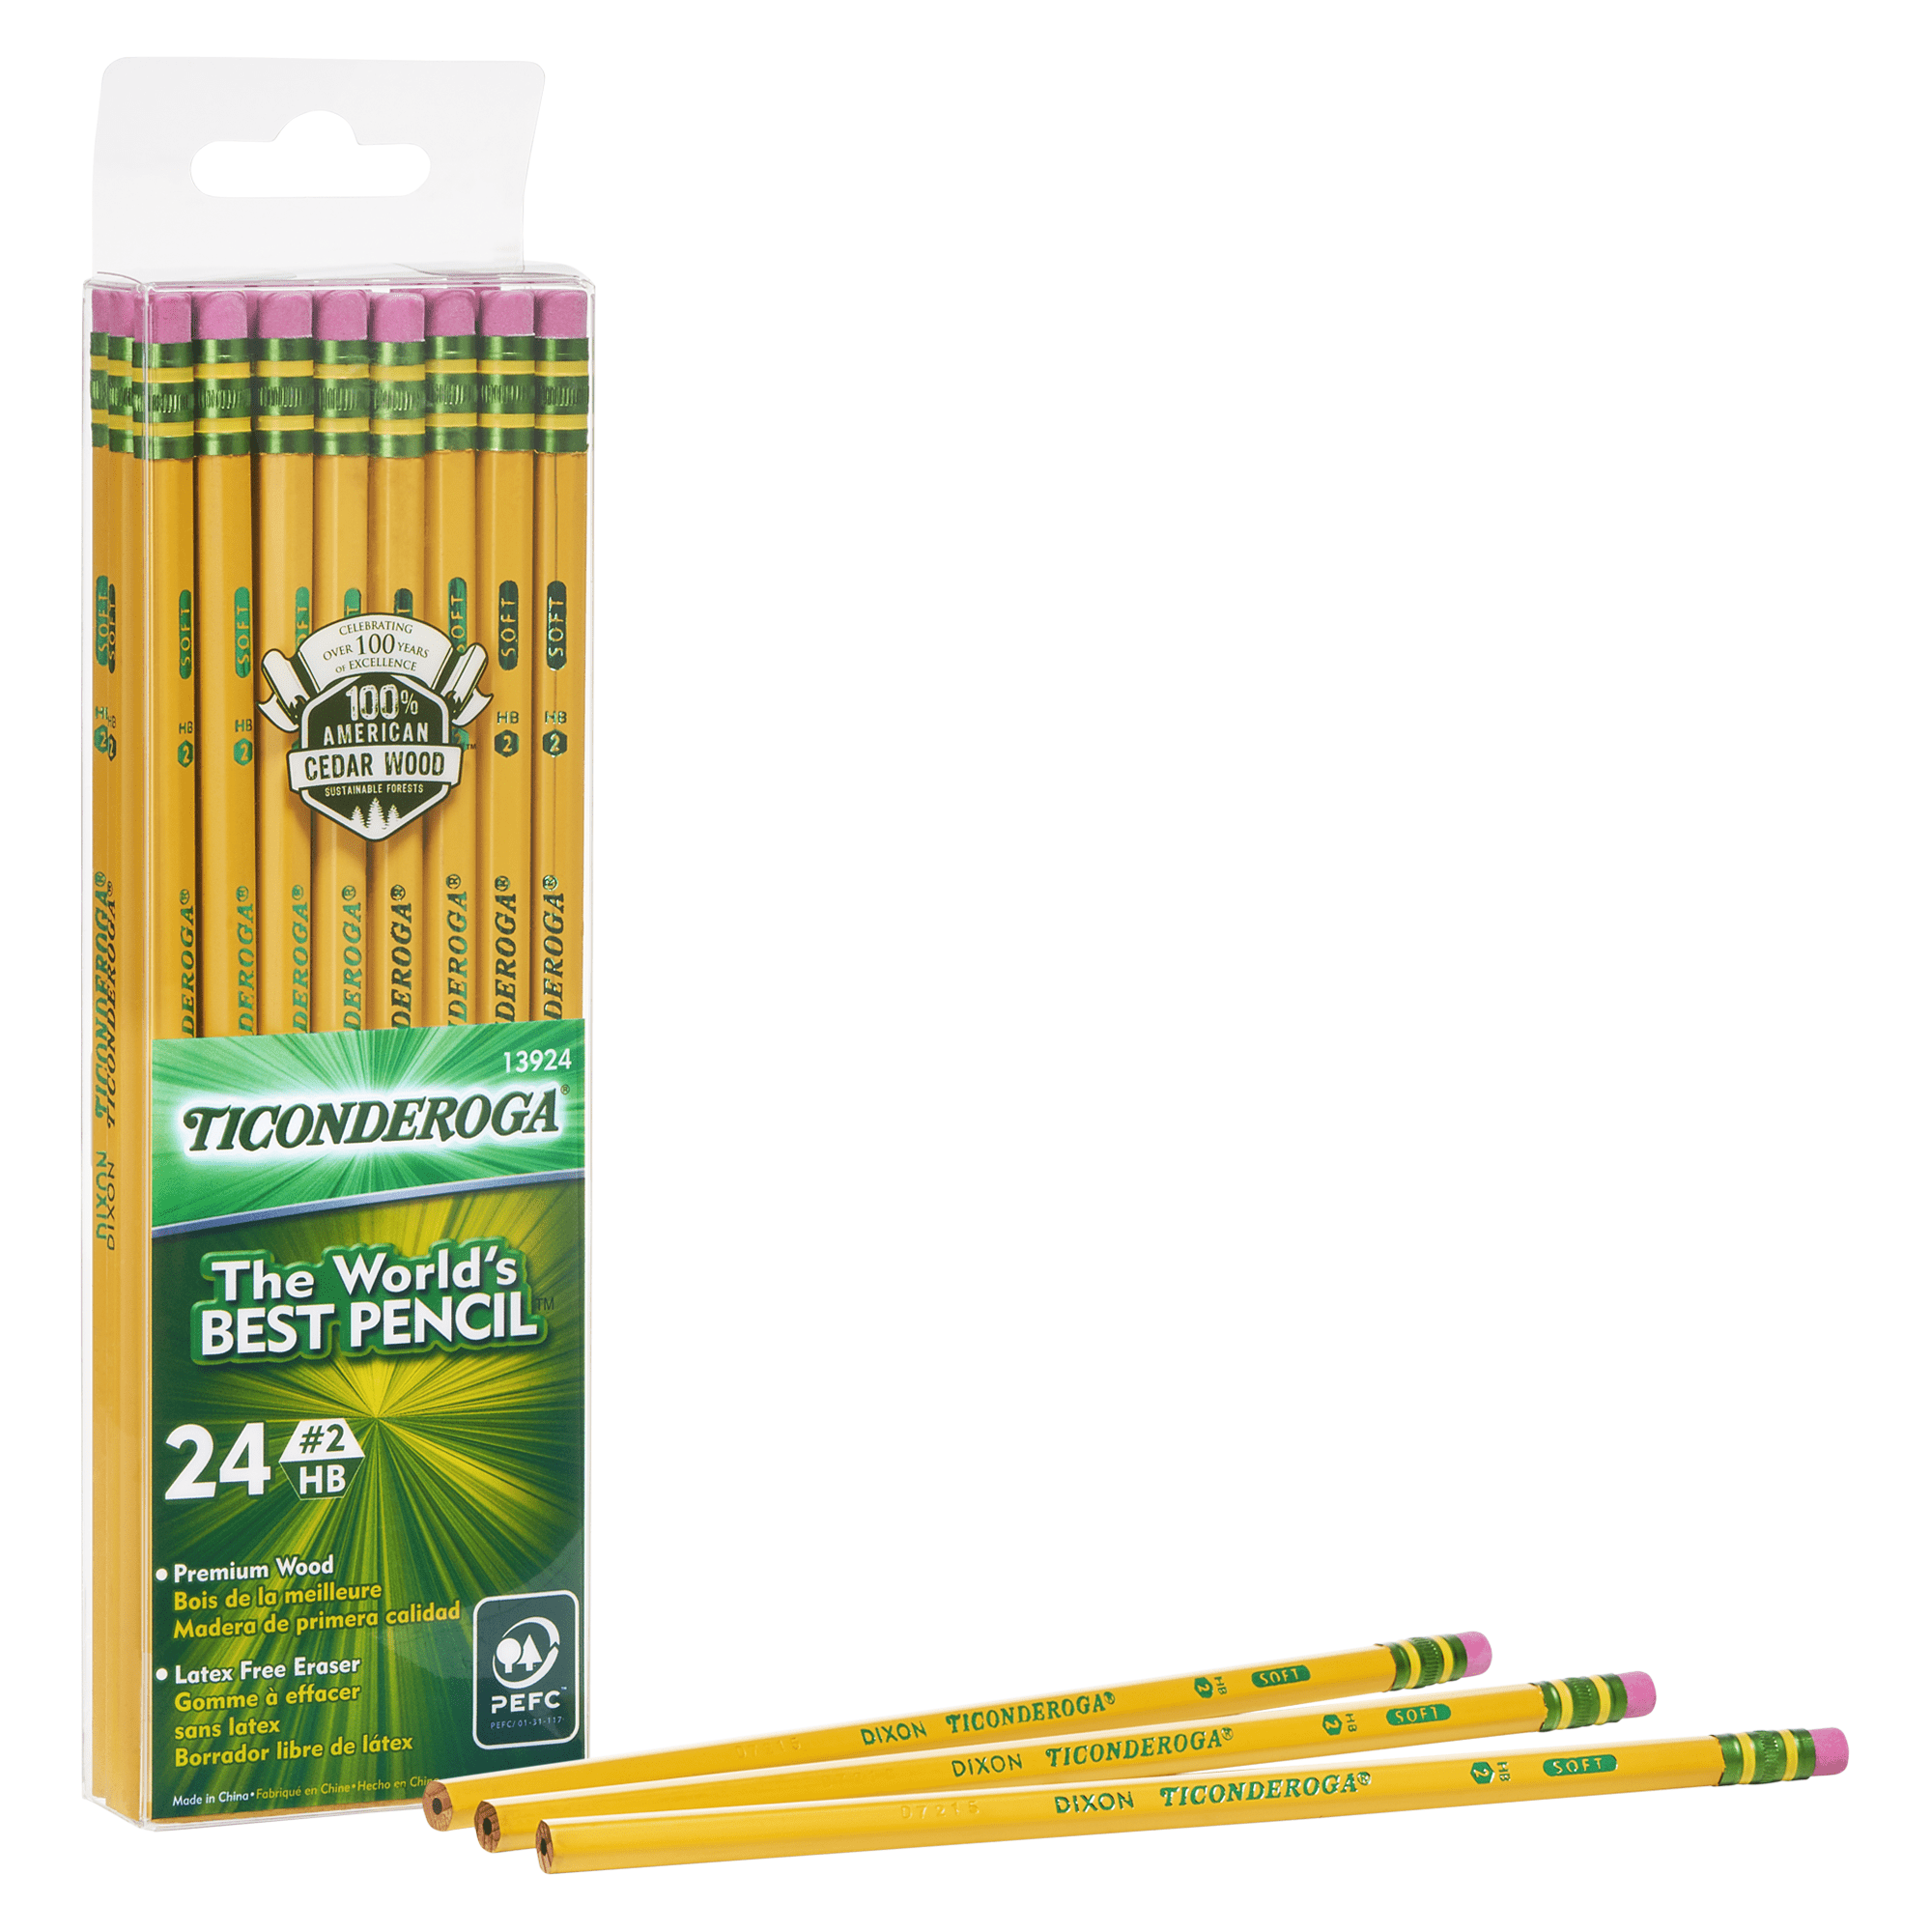 2 HB Pencil. Pre-sharpened Pencils Nature Color S & E TEACHER'S EDITION Pencils with Eraser Tops 50Pcs Pencils Sharpened with Eraser top 